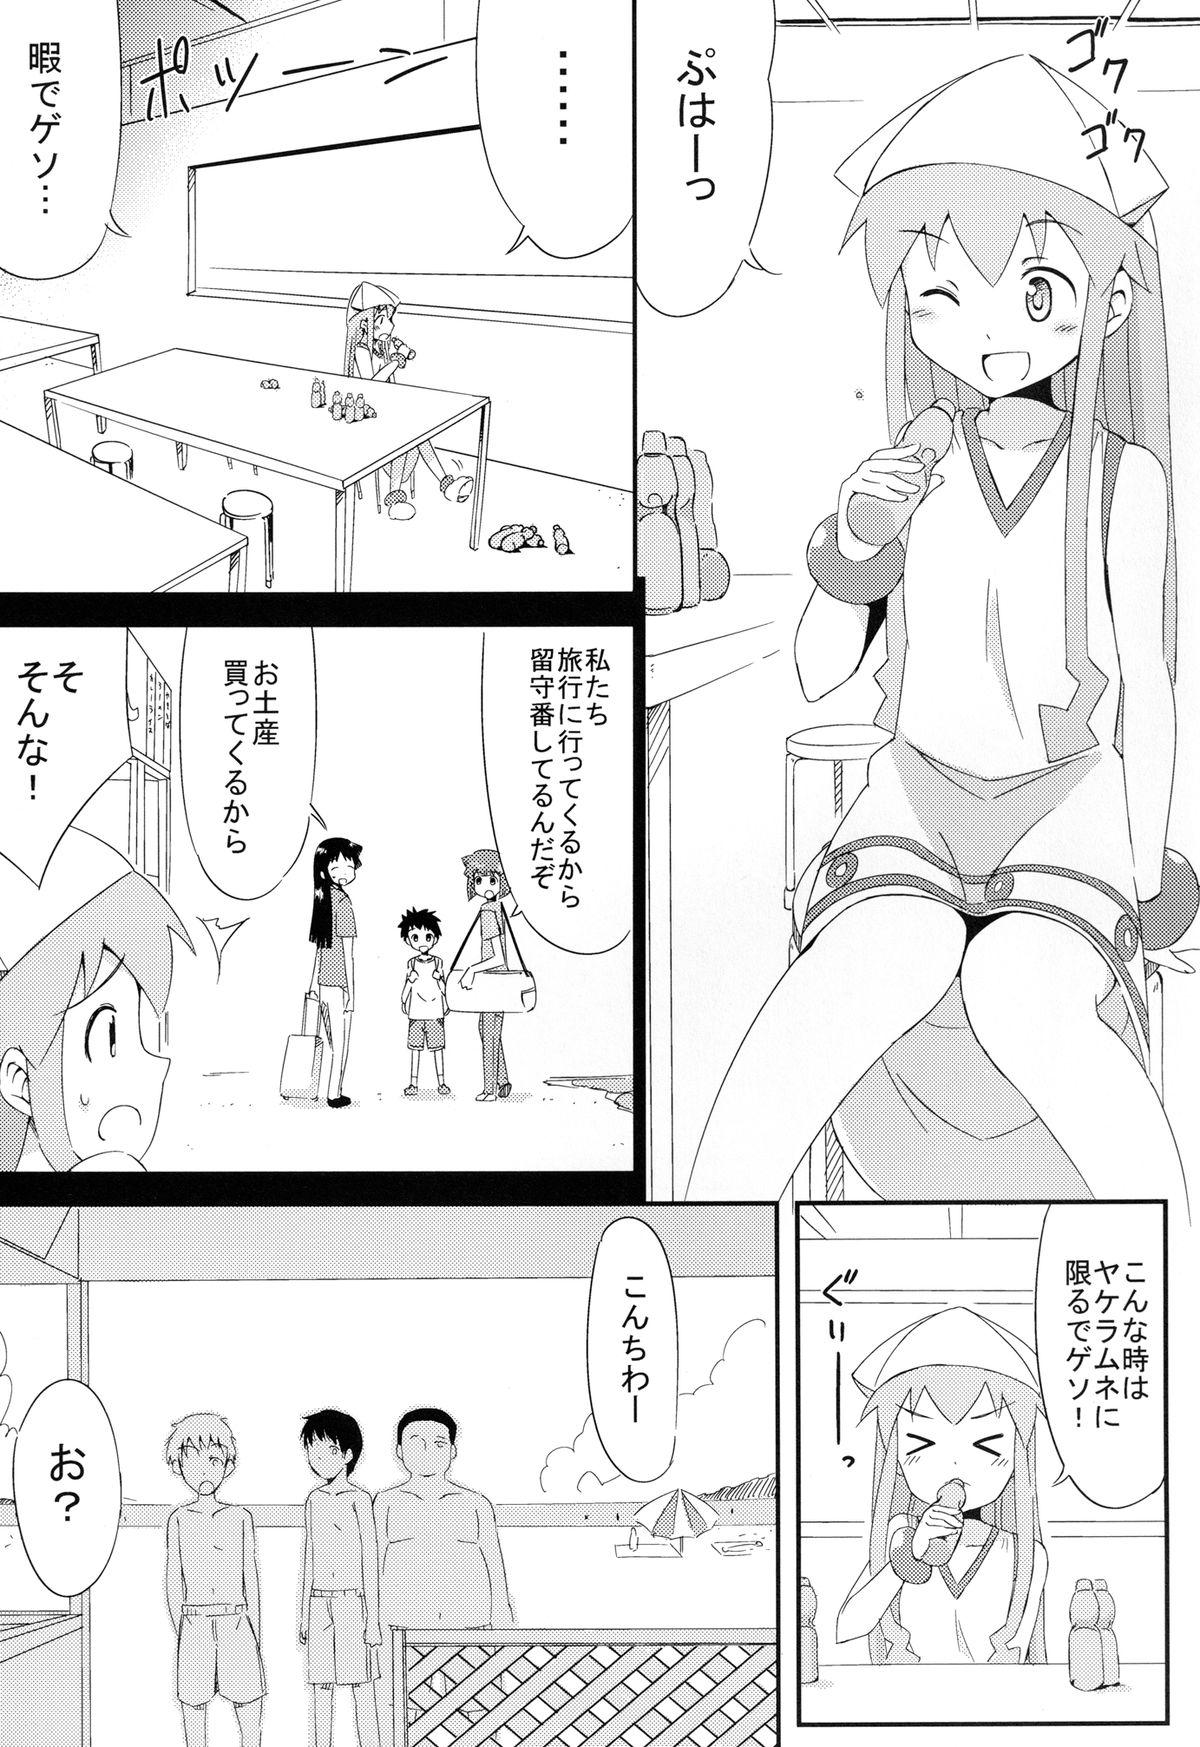 Bribe Jyuurin! Ika Musume - Shinryaku ika musume Abg - Page 3